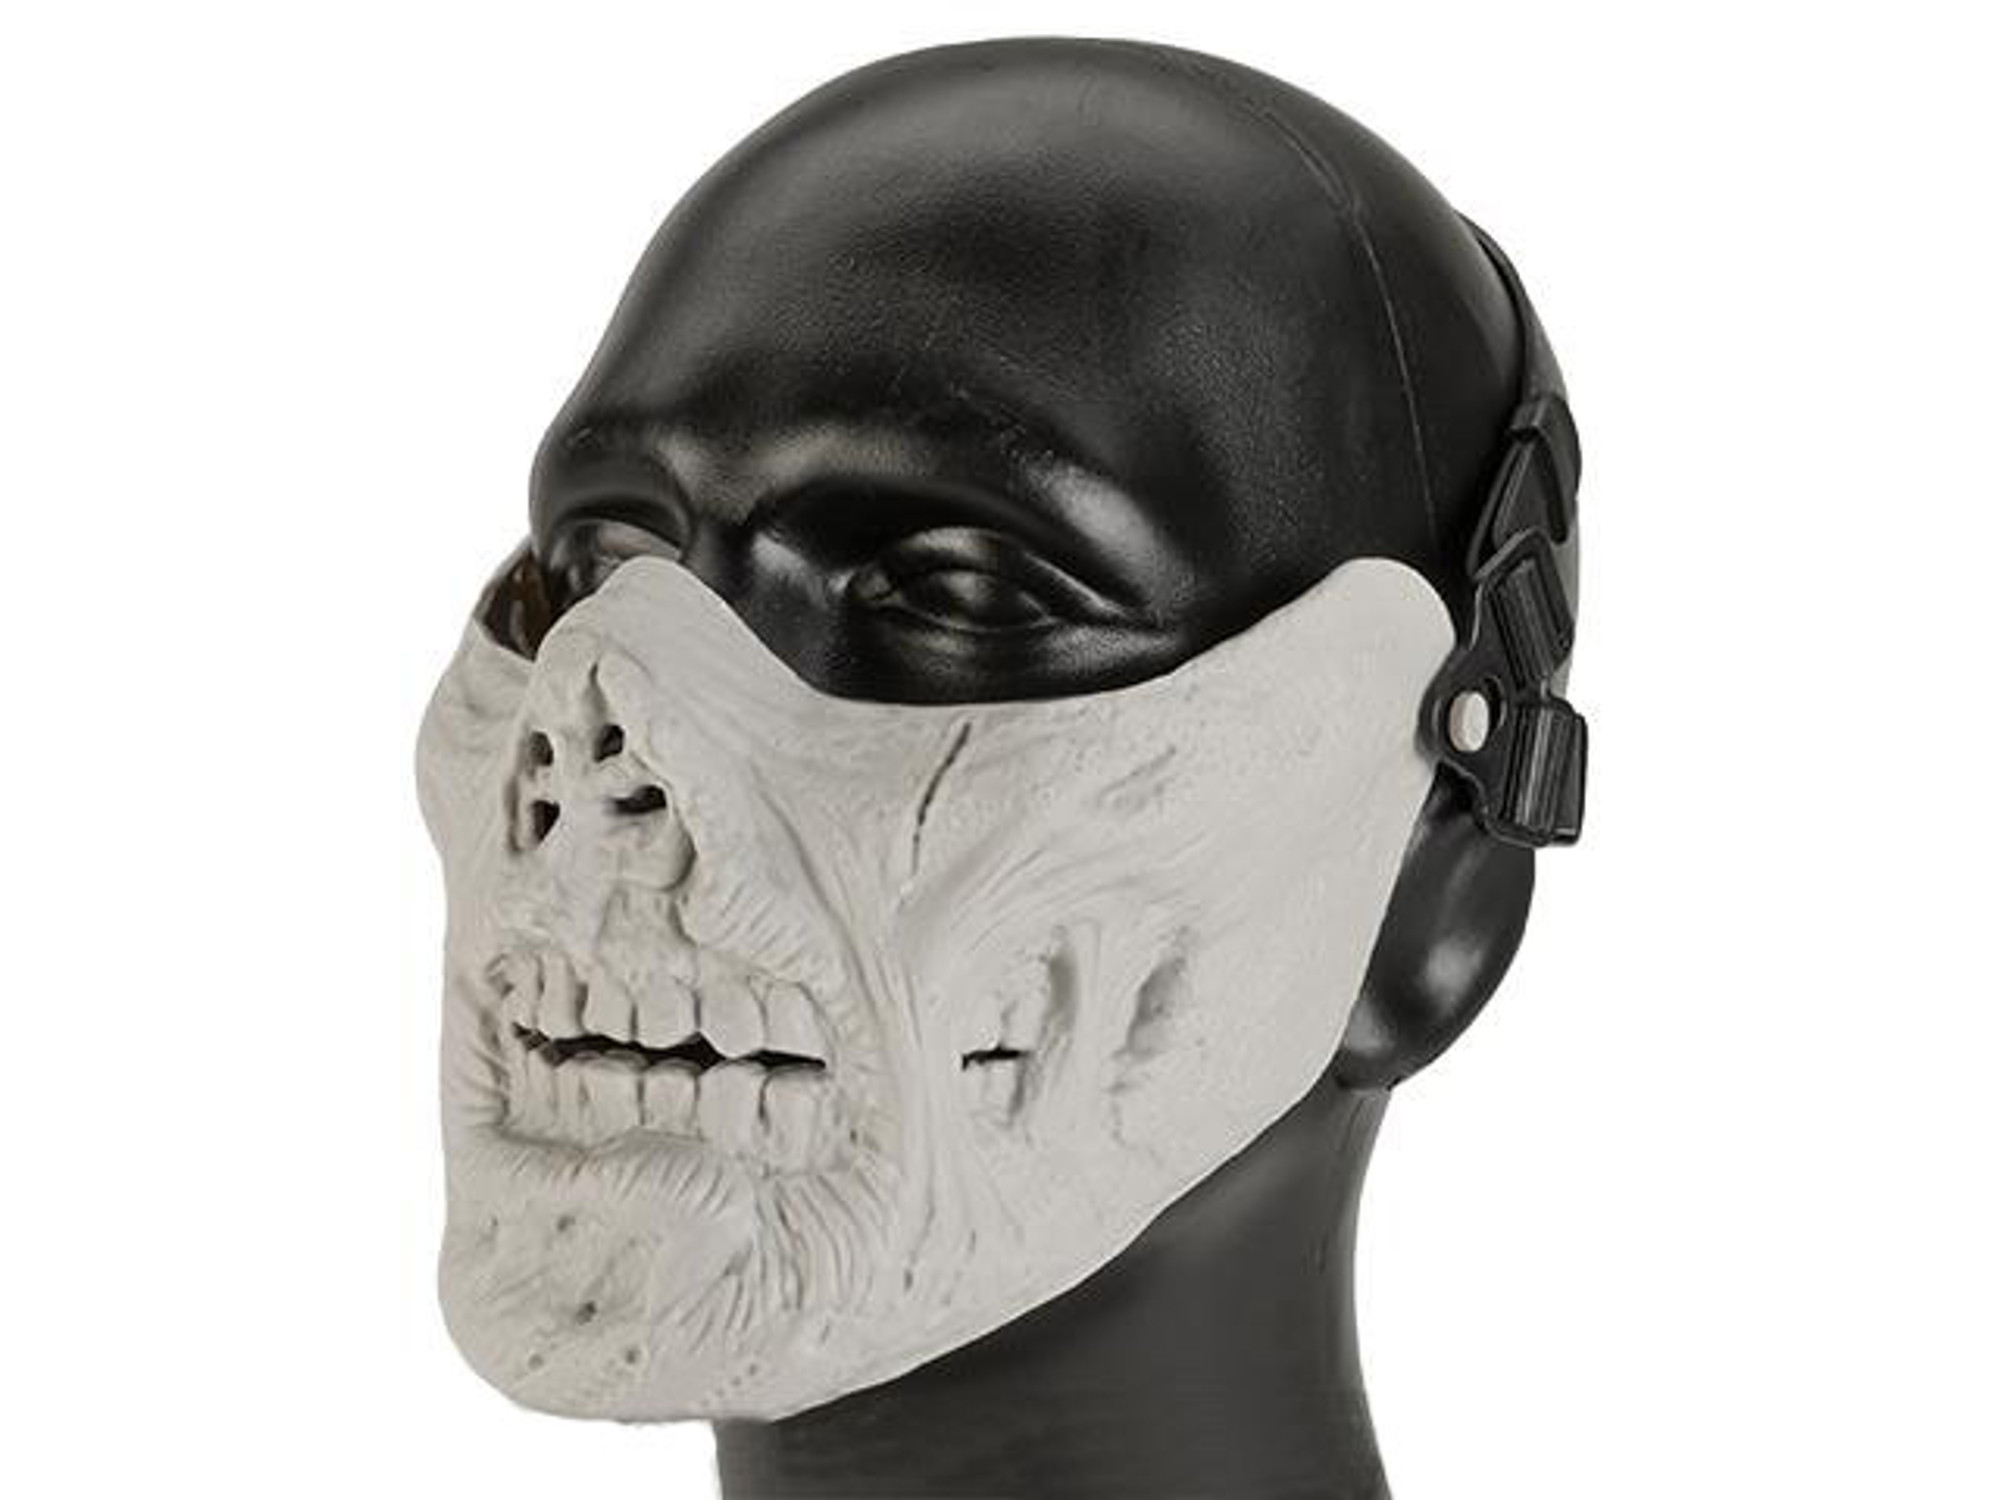 Avengers "Zombie" Iron Face Lower Half Mask - Bone Grey